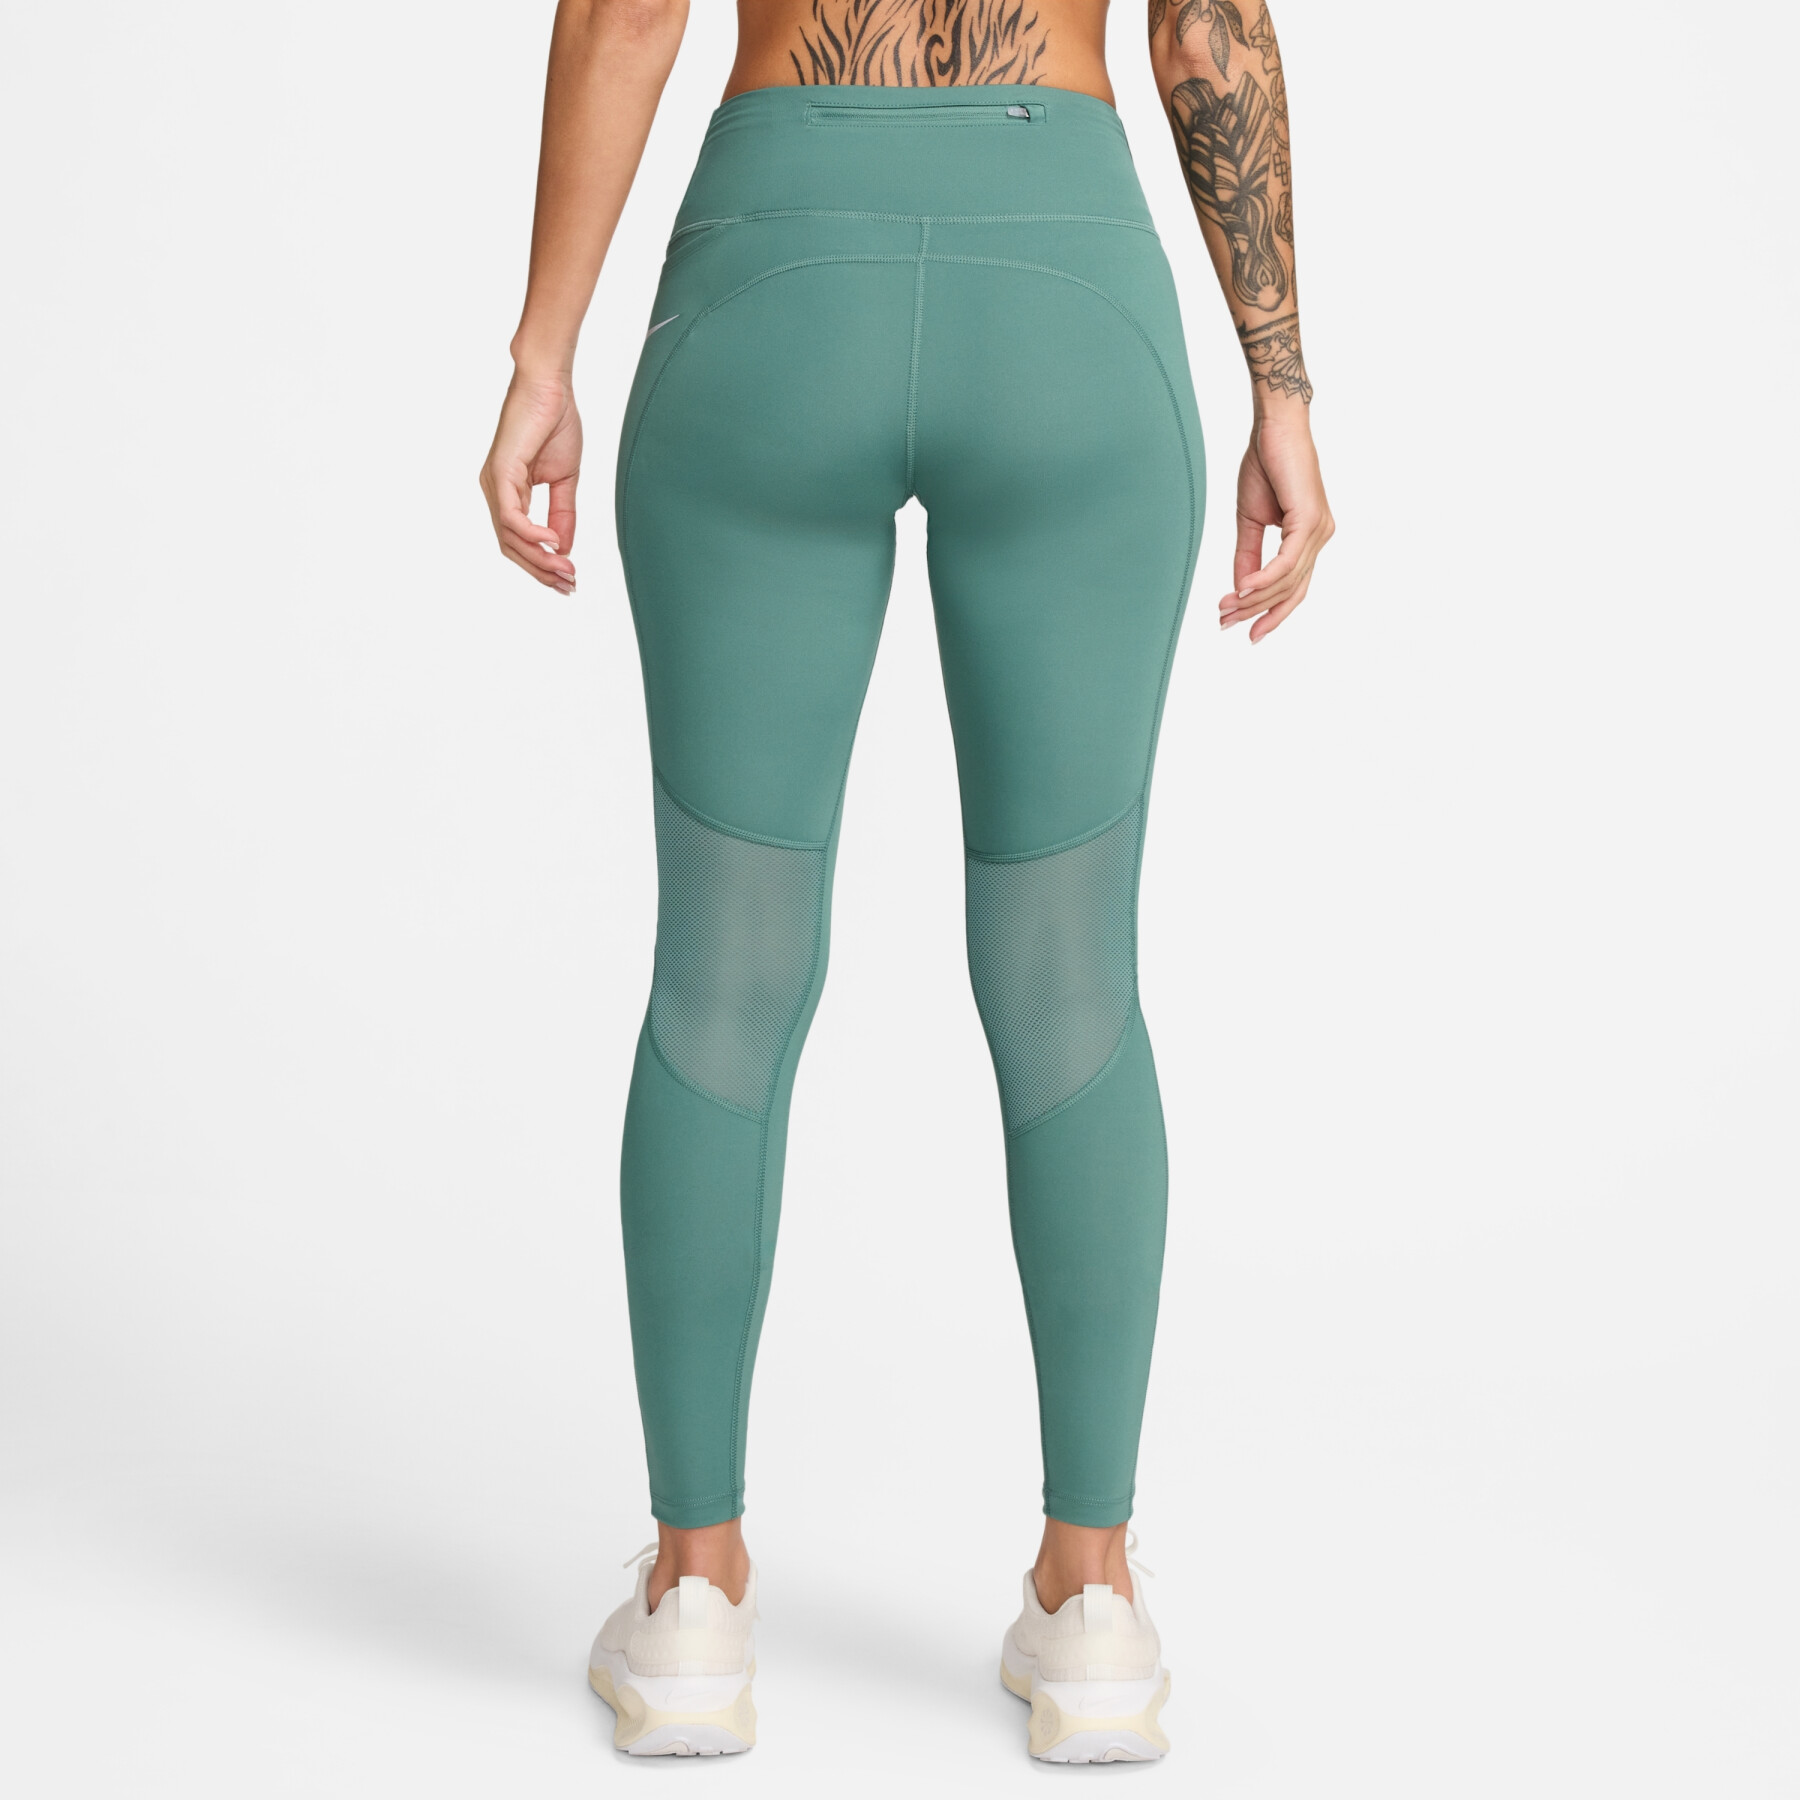 Women's leggings Nike Epic Fast